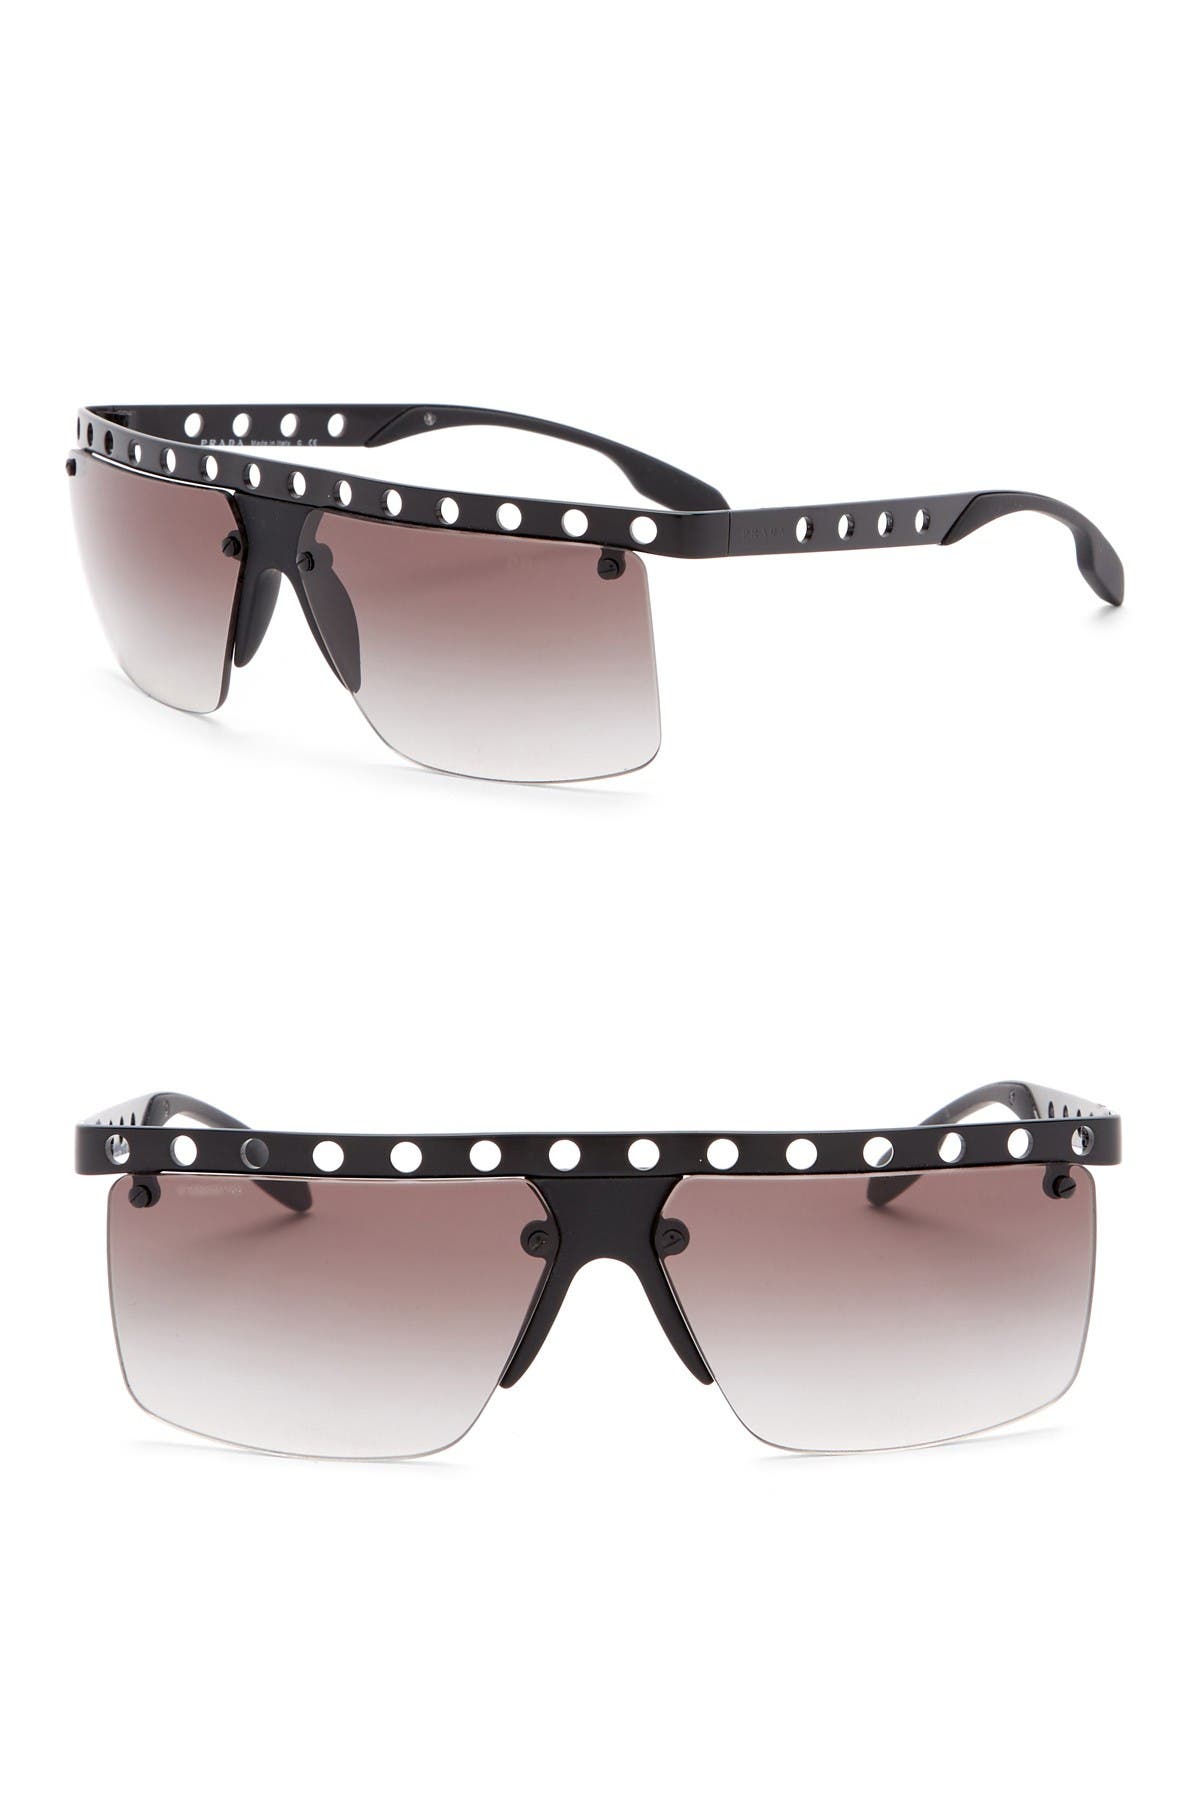 prada flat top sunglasses